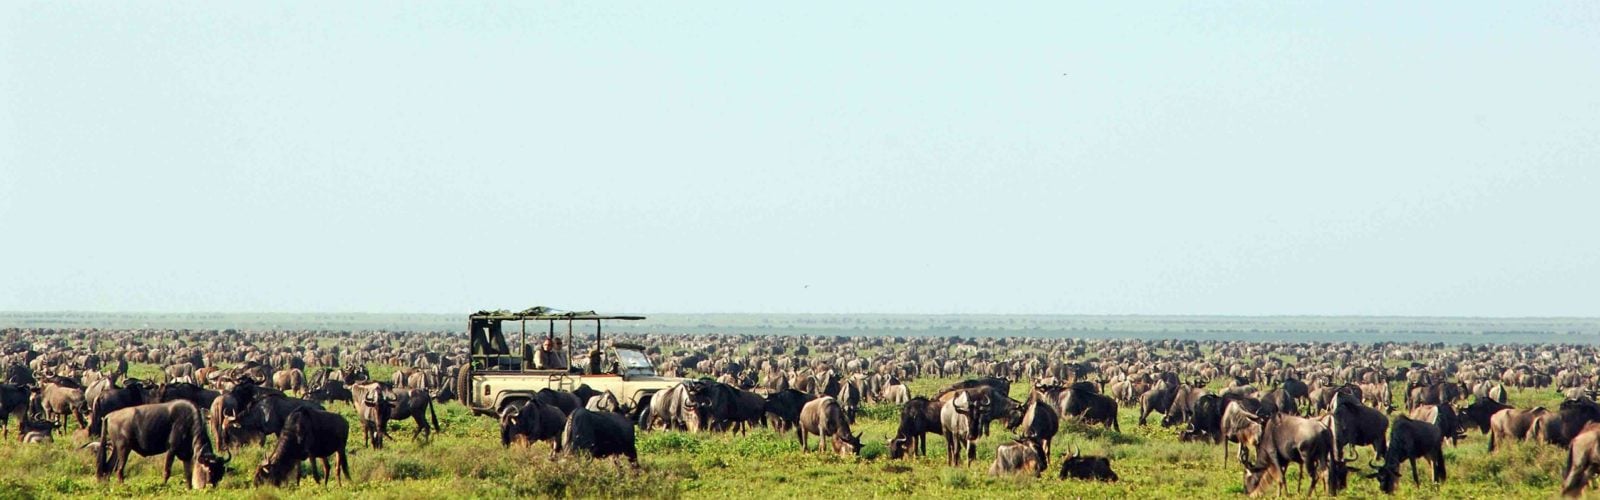 Great Migration safari, Tanzania, Africa